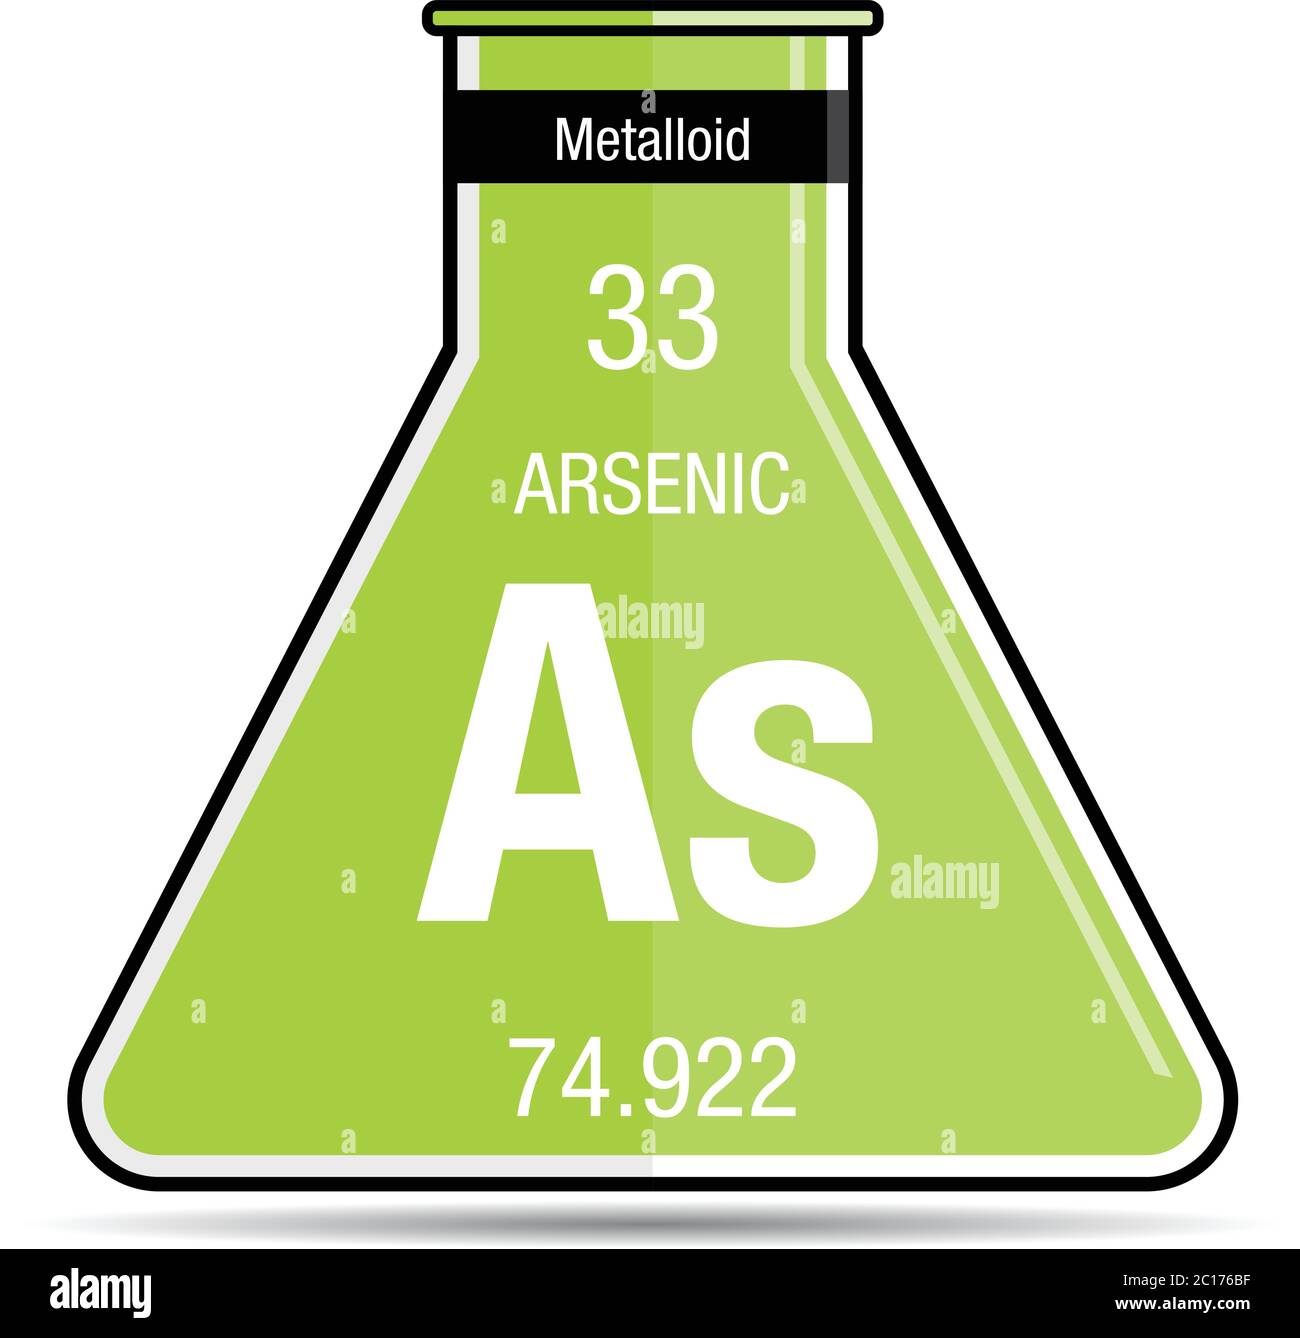 arsenic symbol